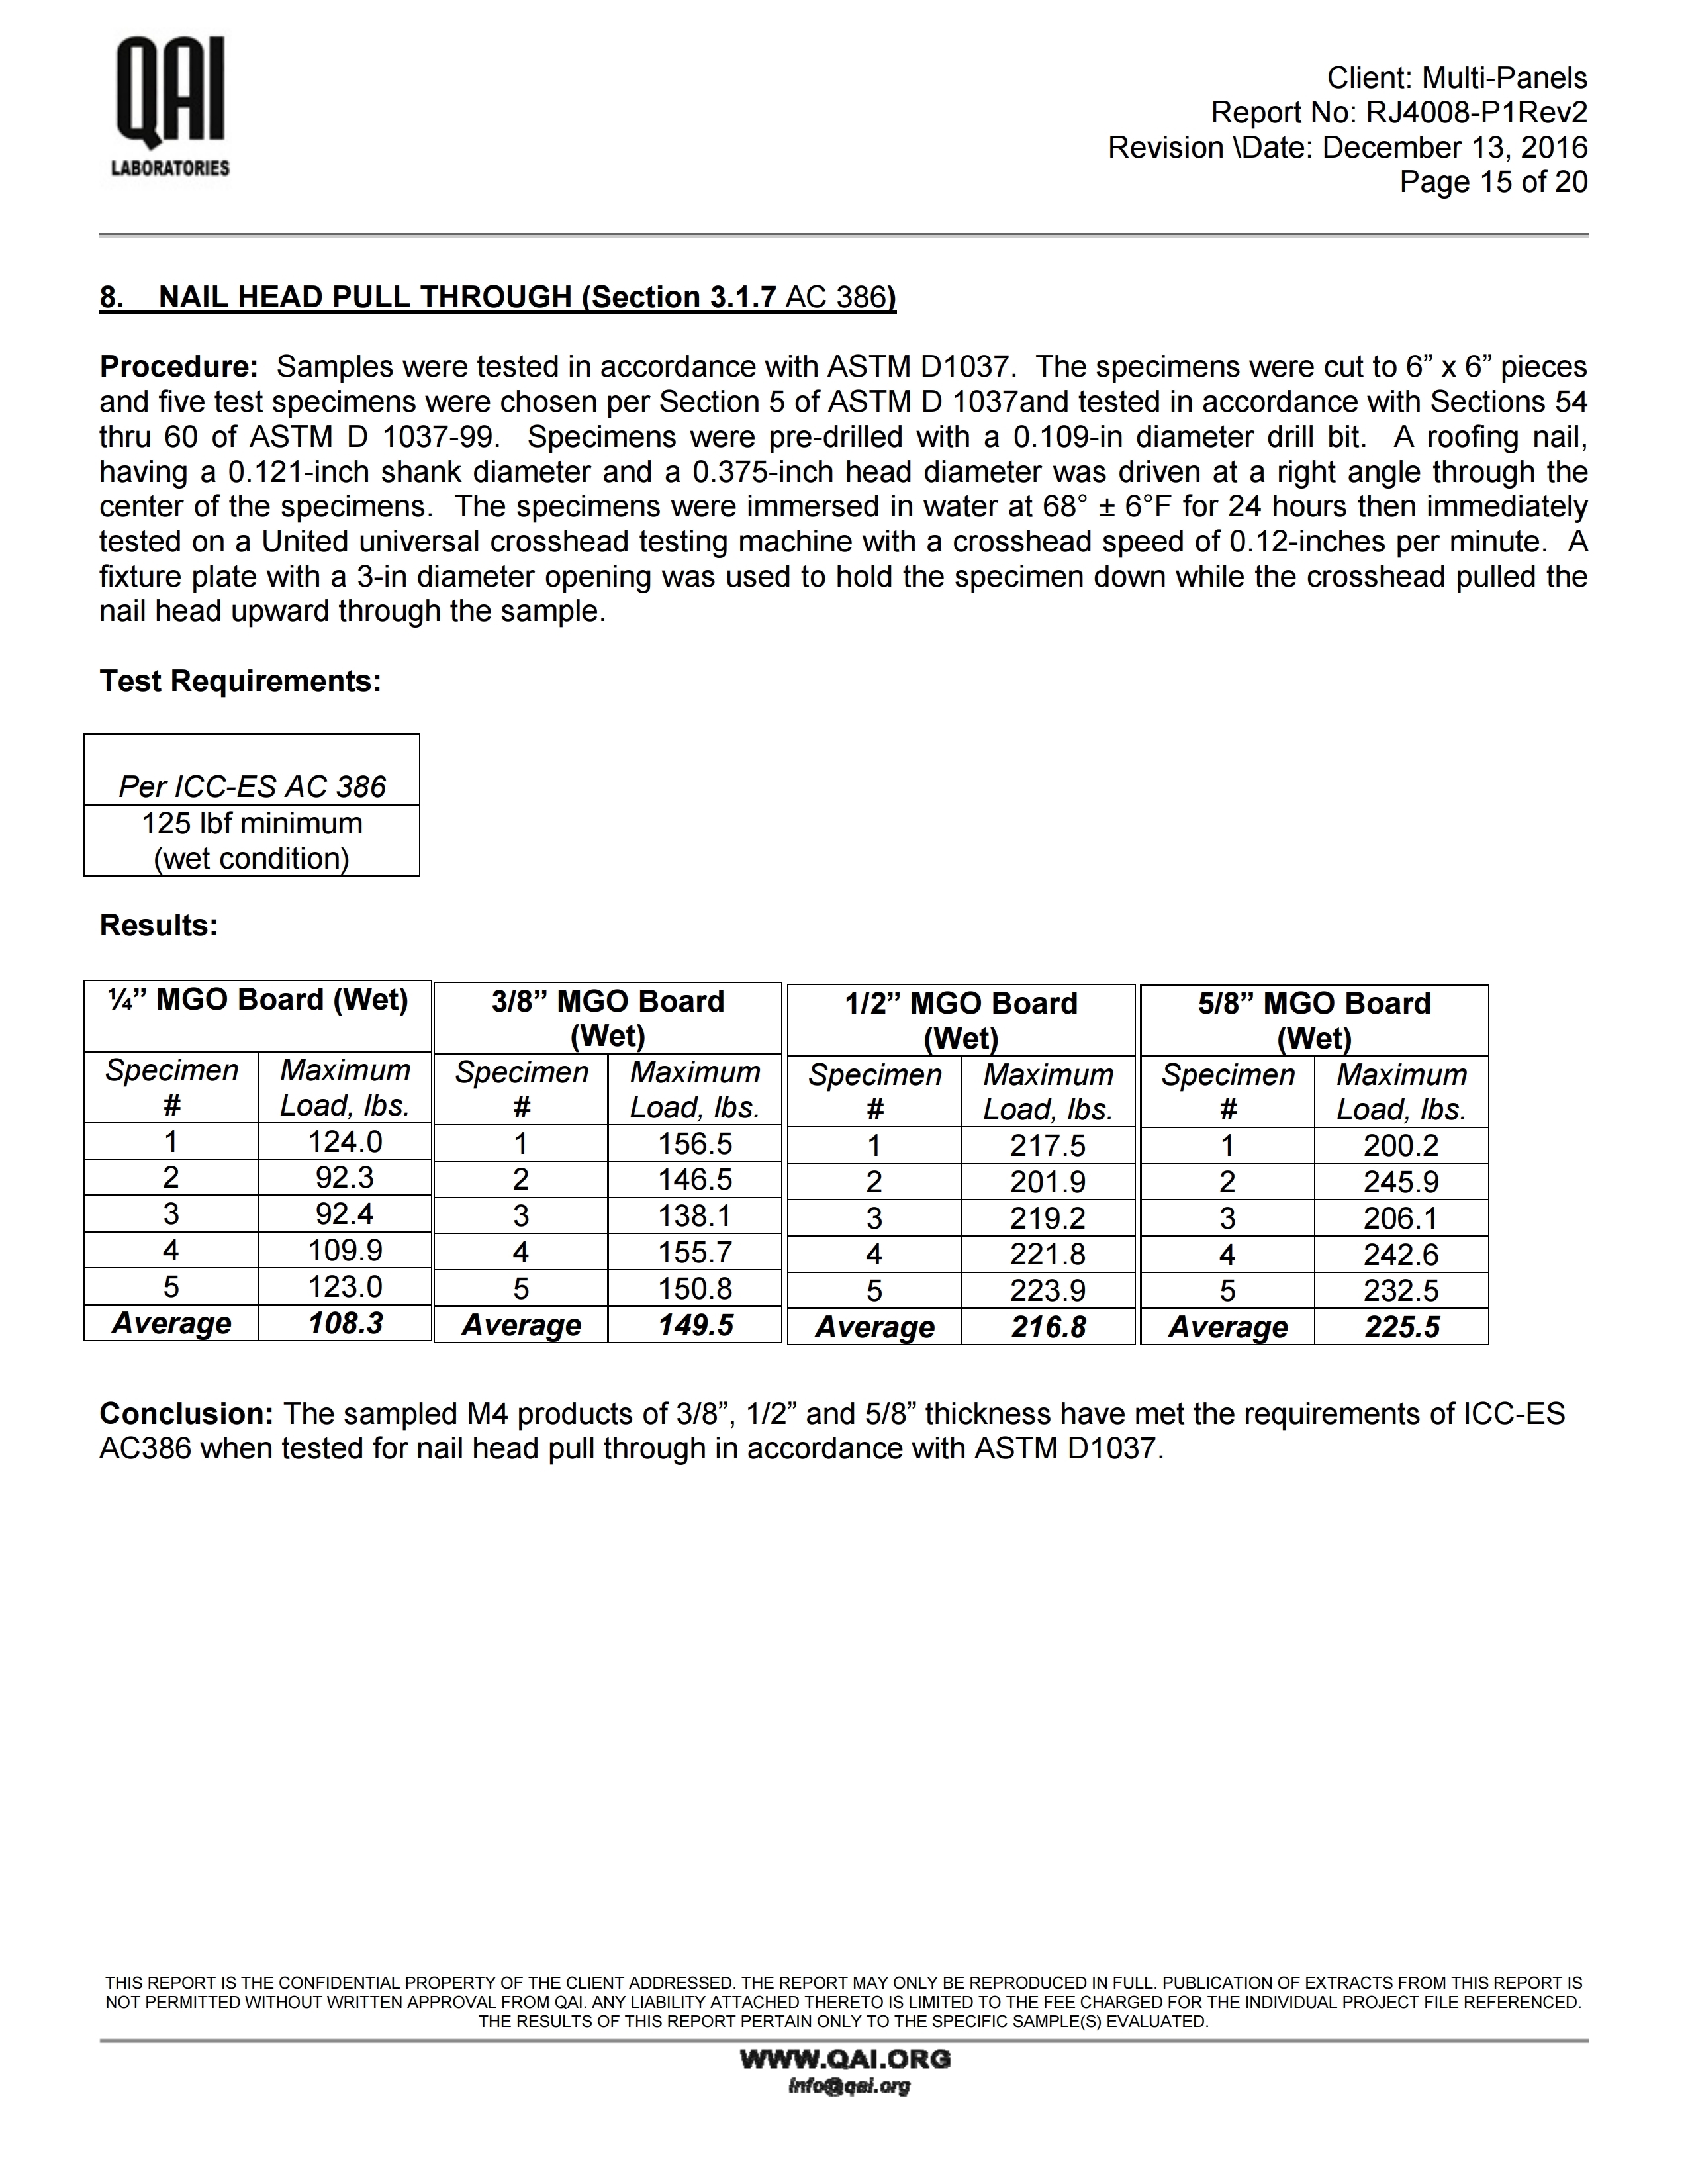 RJ4008-P1REV2-Multi-Panels-M4-AC386 Report-13122016 (2).pdf_page_15.jpg